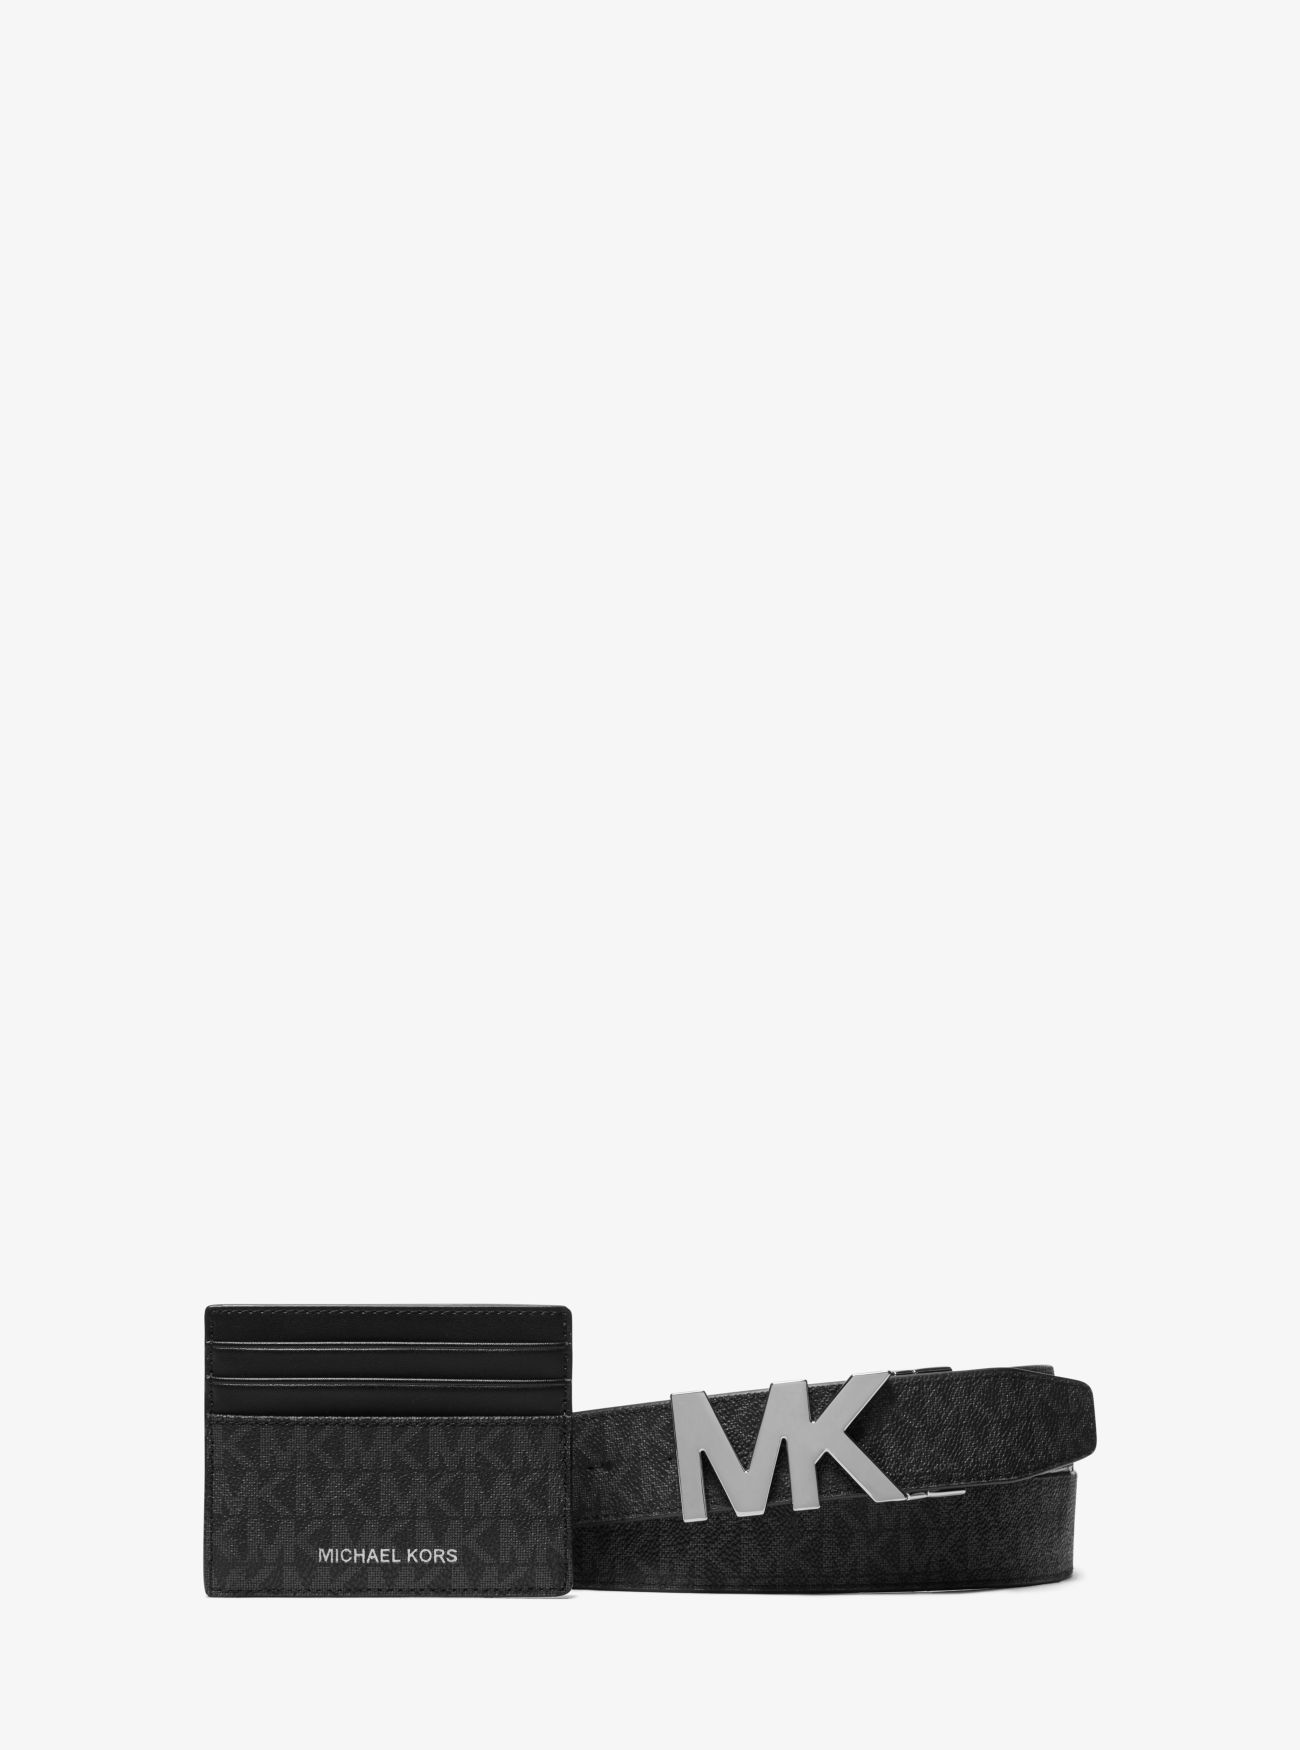 MK Signature Logo Card Case and Belt Gift Set - Black - Michael Kors